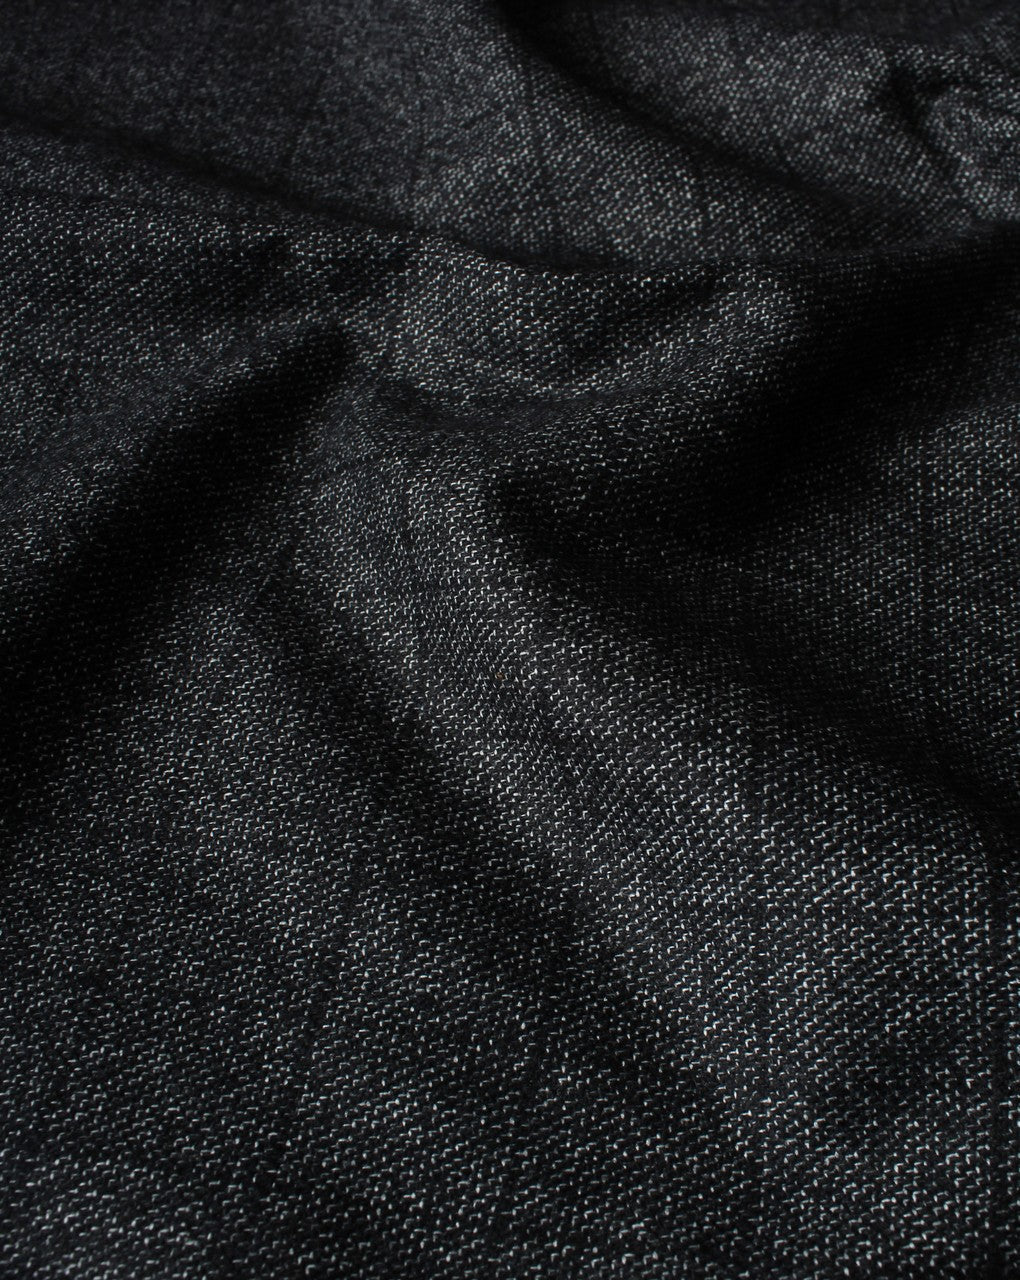 Black Checks Design Woolen Tweed Fabric